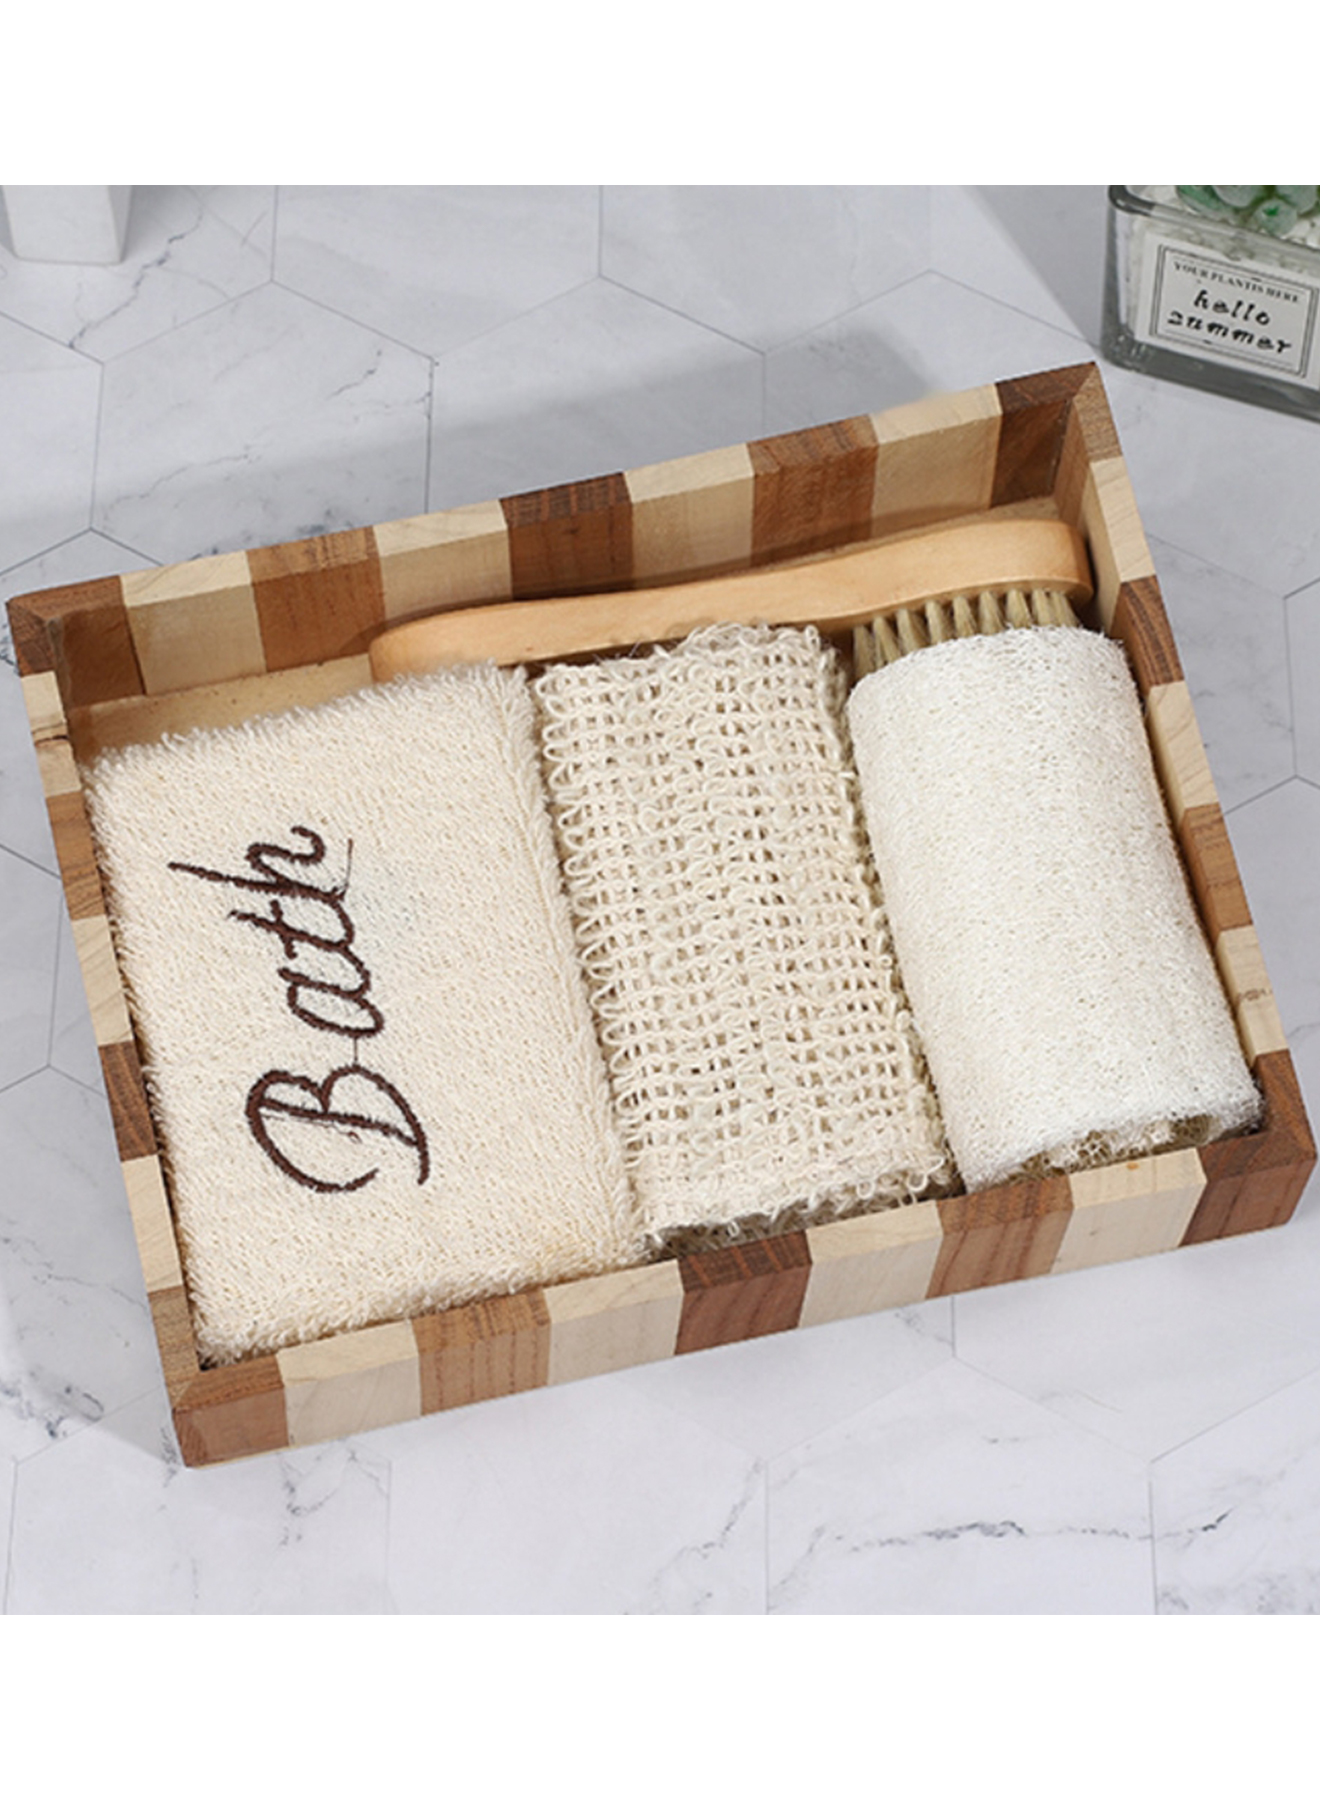 4-Piece Bath Gift Box Set